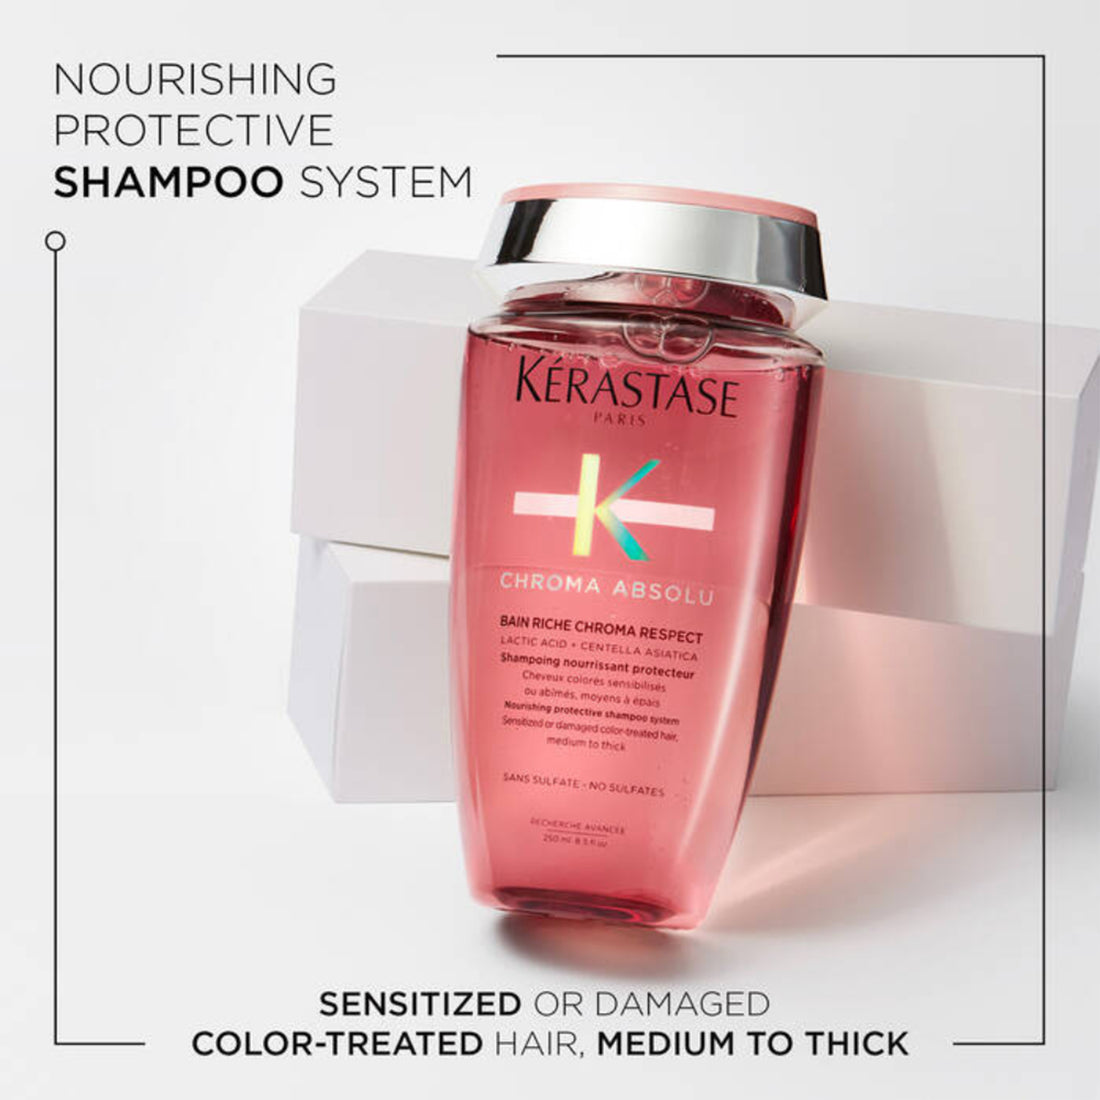 Chroma Absolu Bain Riche Chroma Respect Nourishing Protective Shampoo System